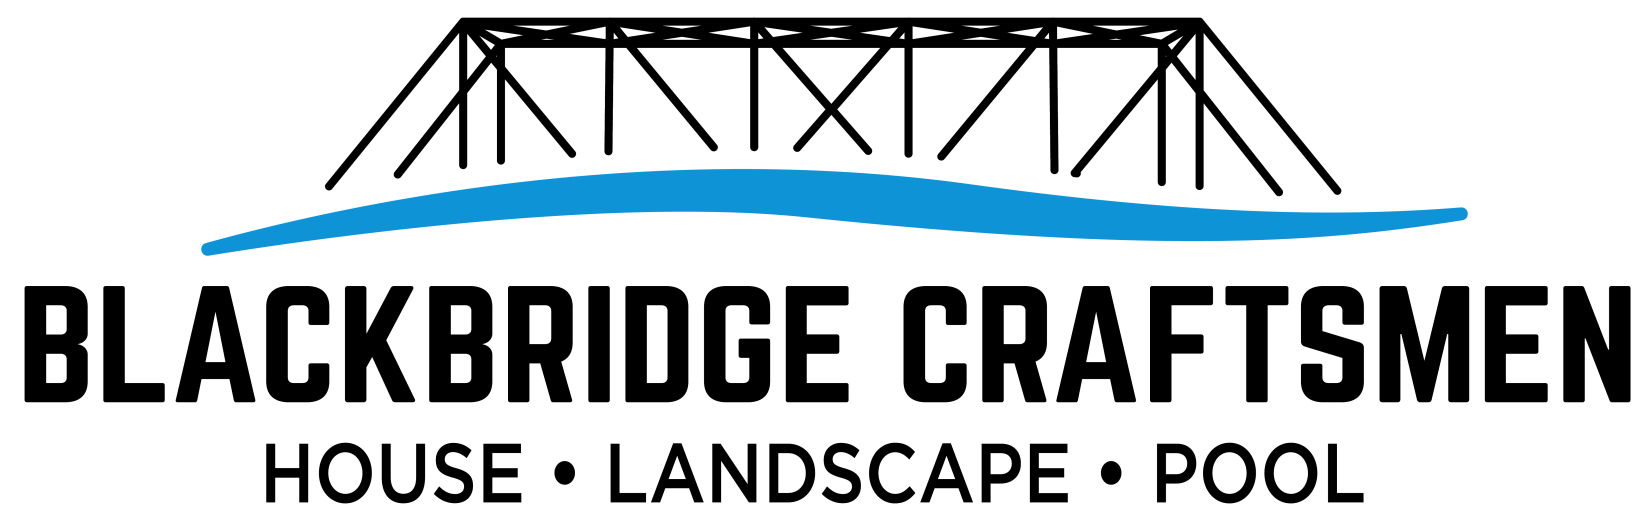 Blackbridge Craftsmen Logo